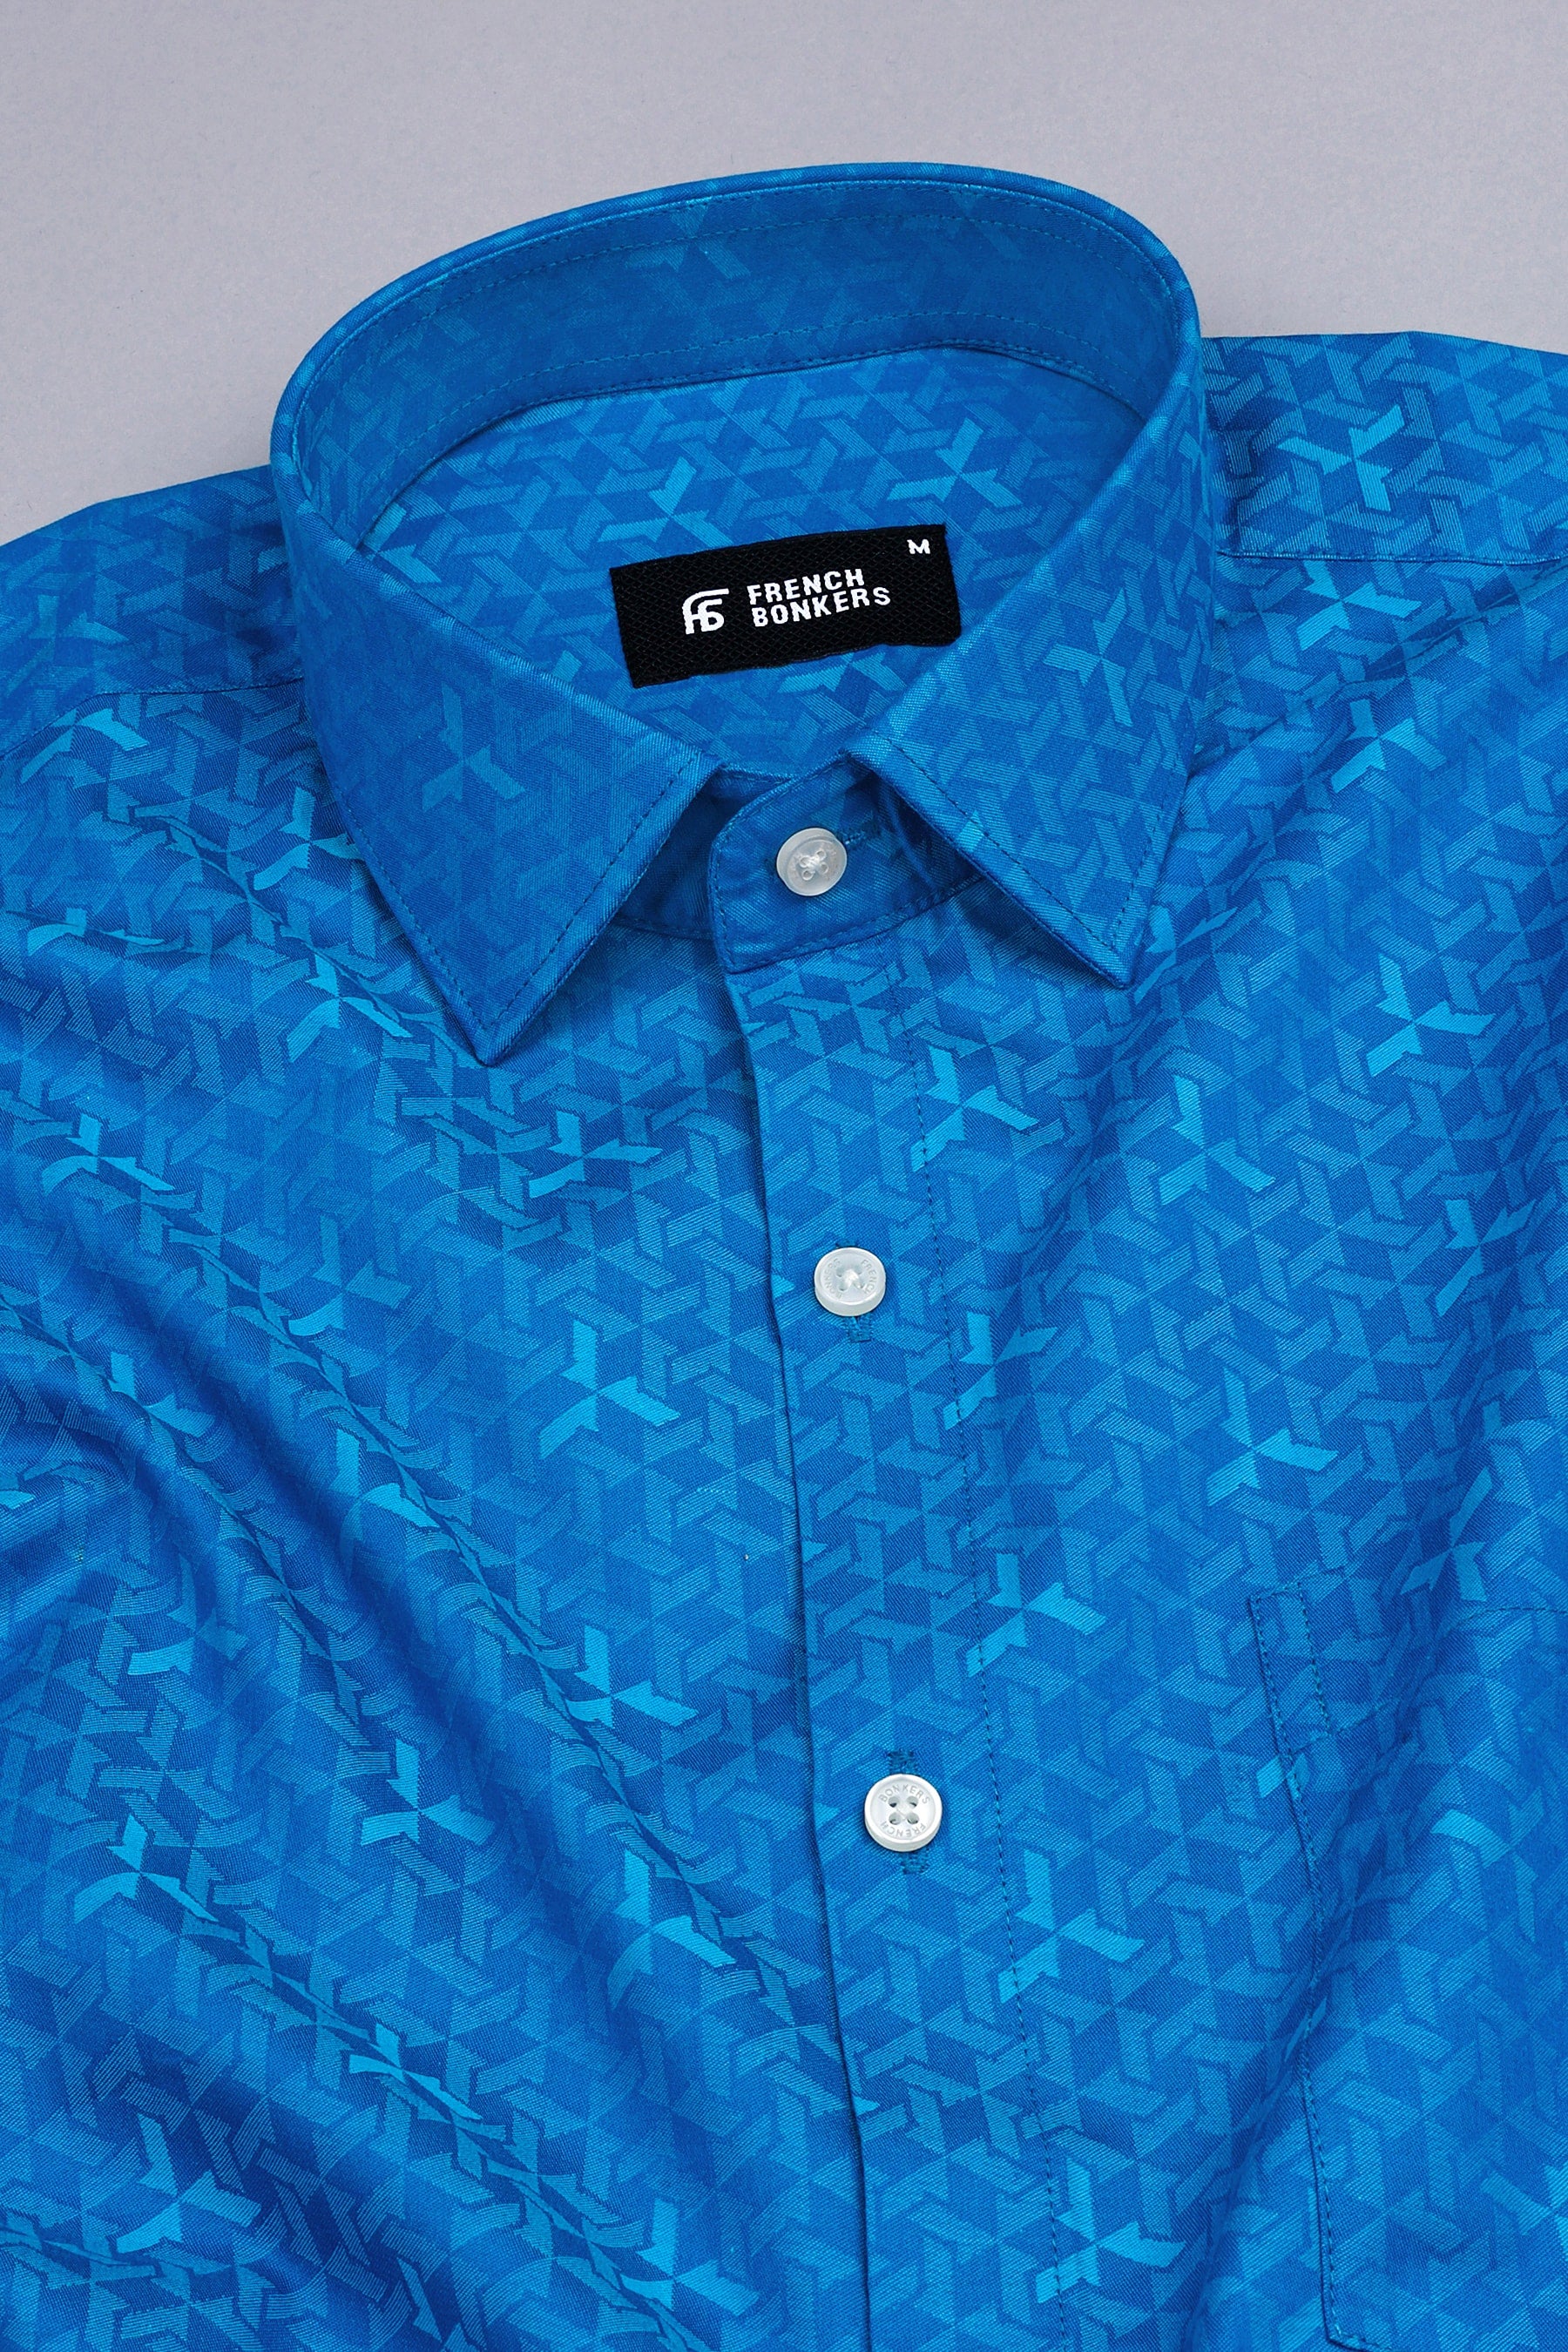 Dodger blue jacquard printed shirt